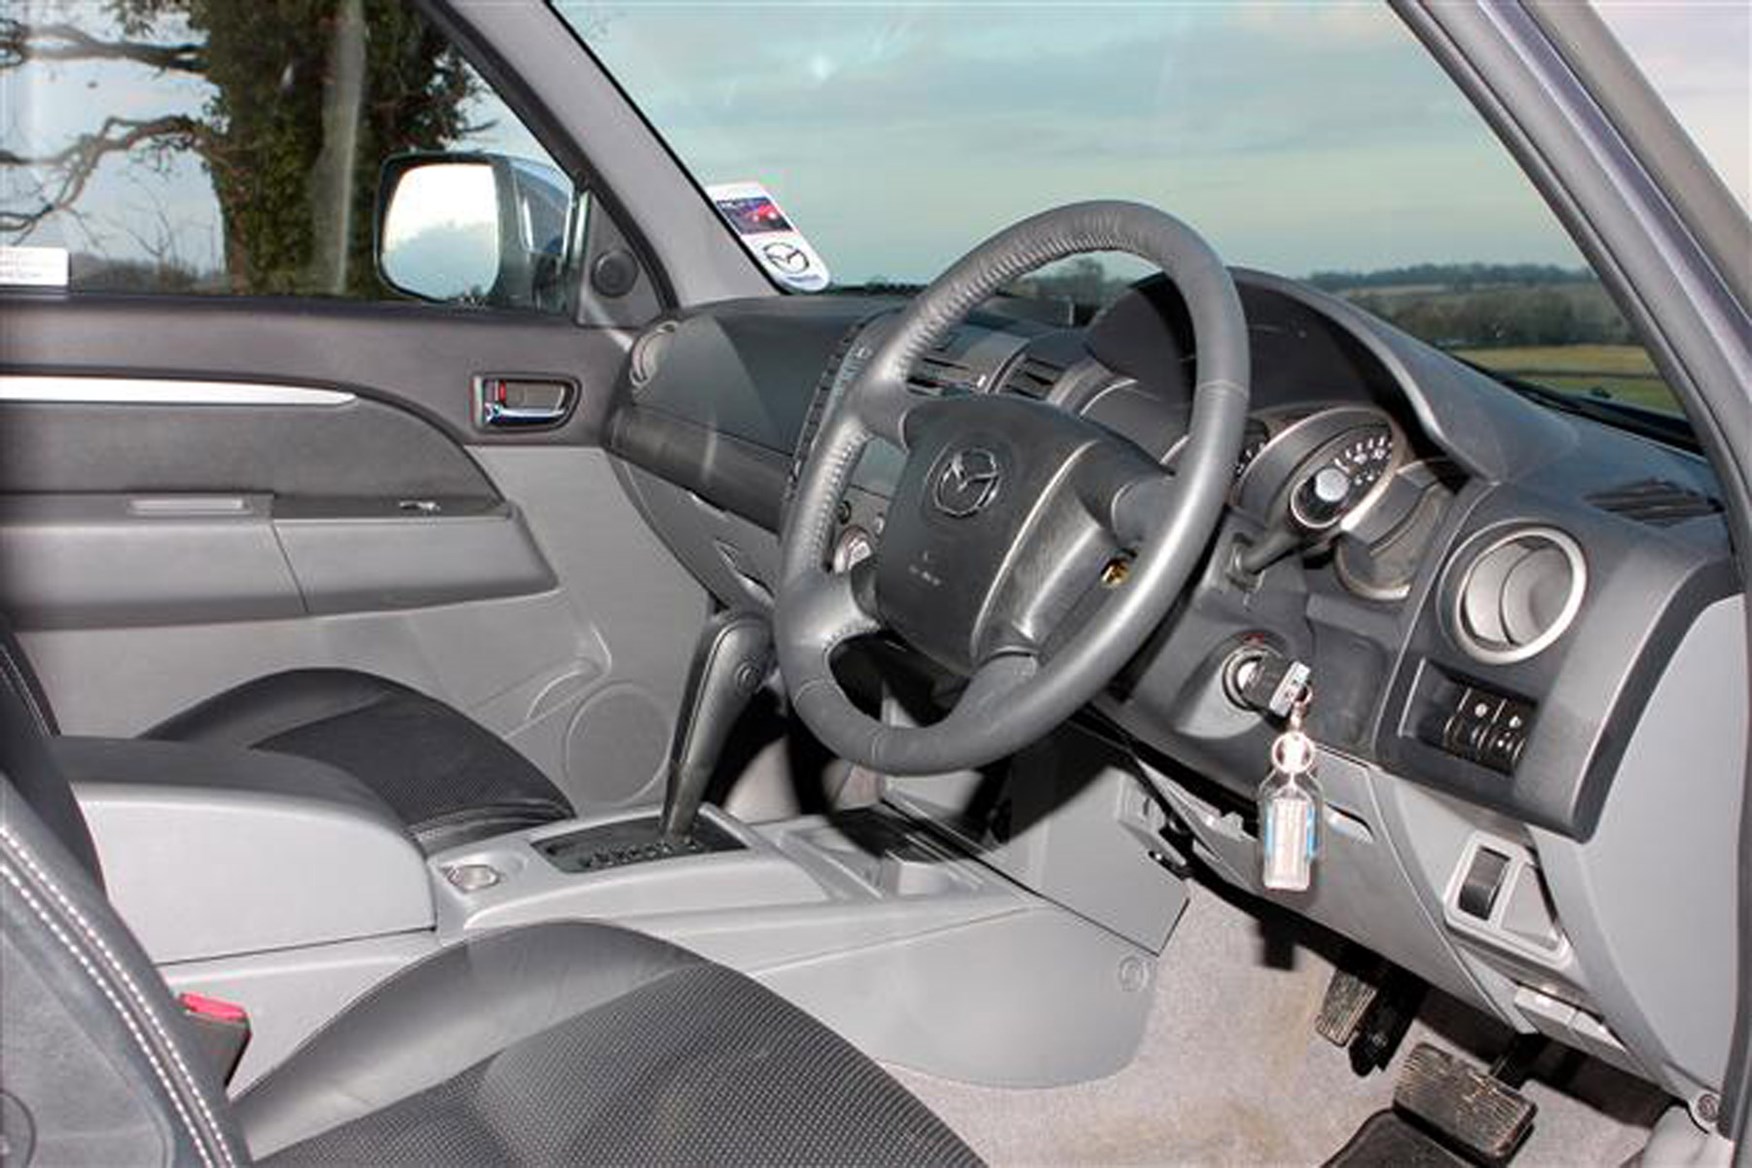 Mazda BT-50 review on Parkers Vans - interior